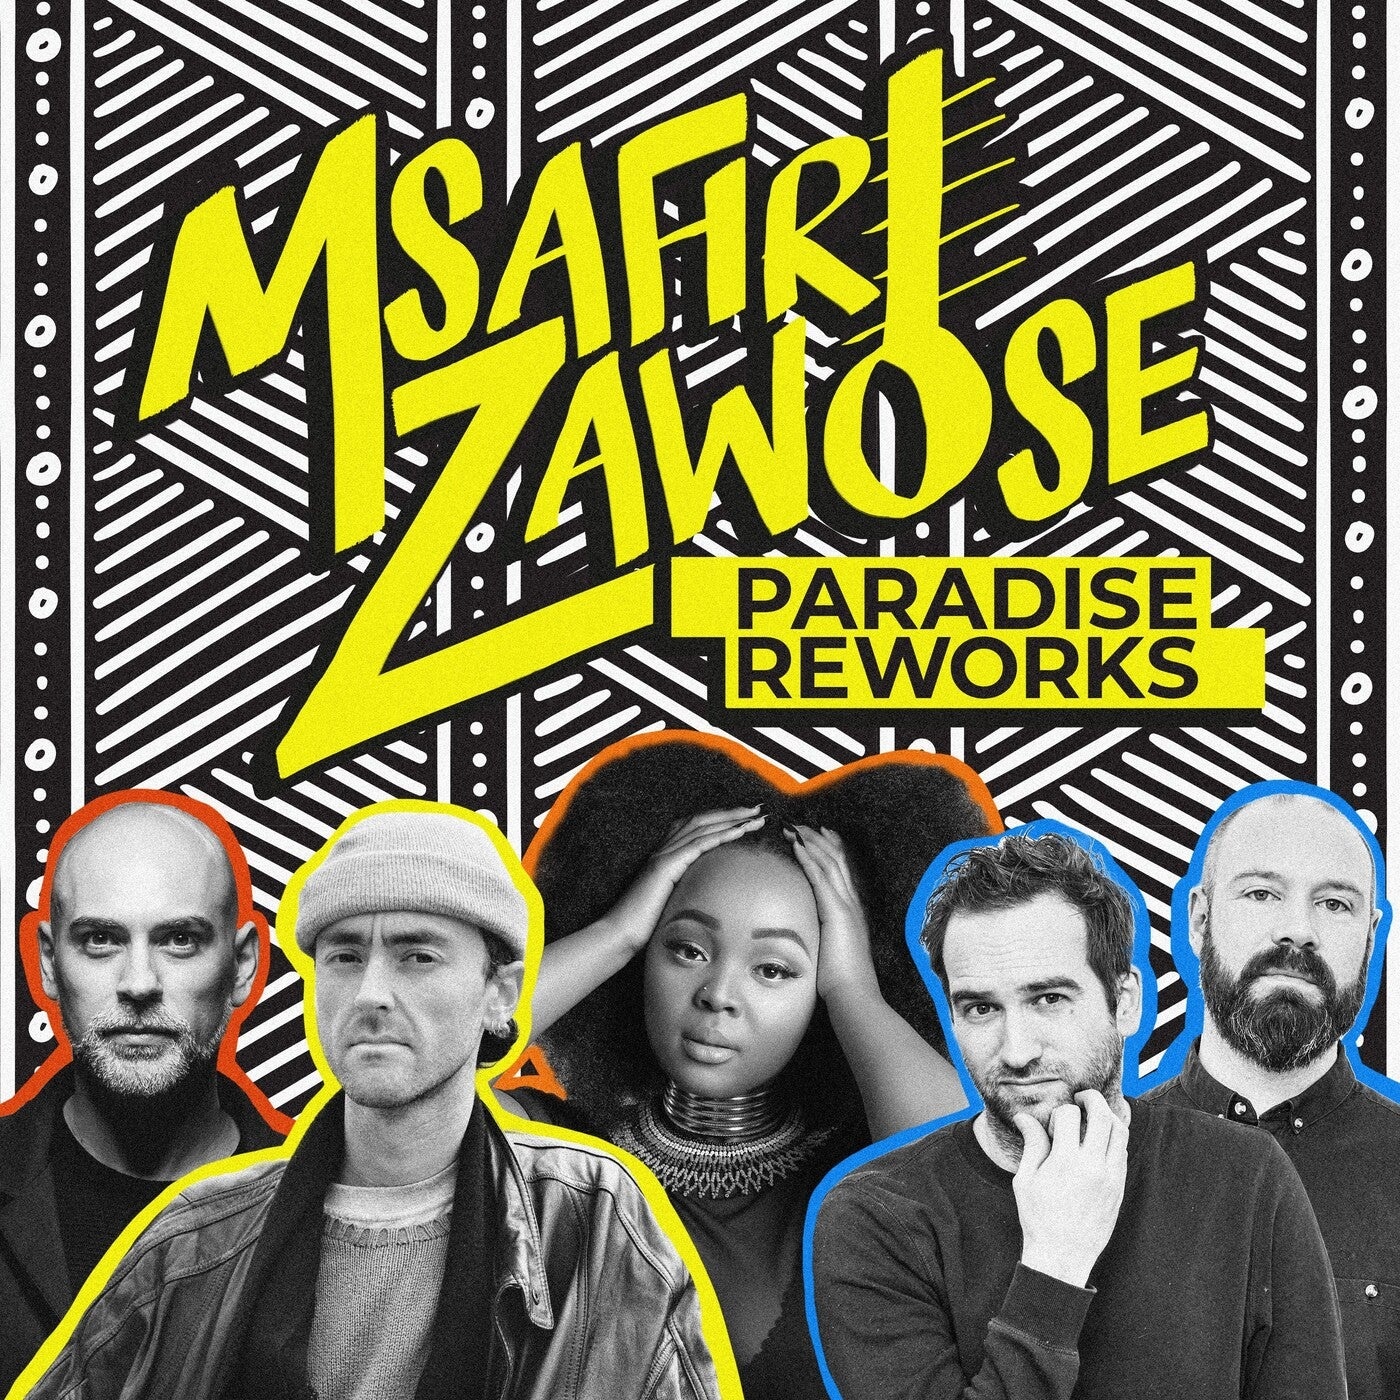 Msafiri Zawose - Paradise Reworks [PSS037]